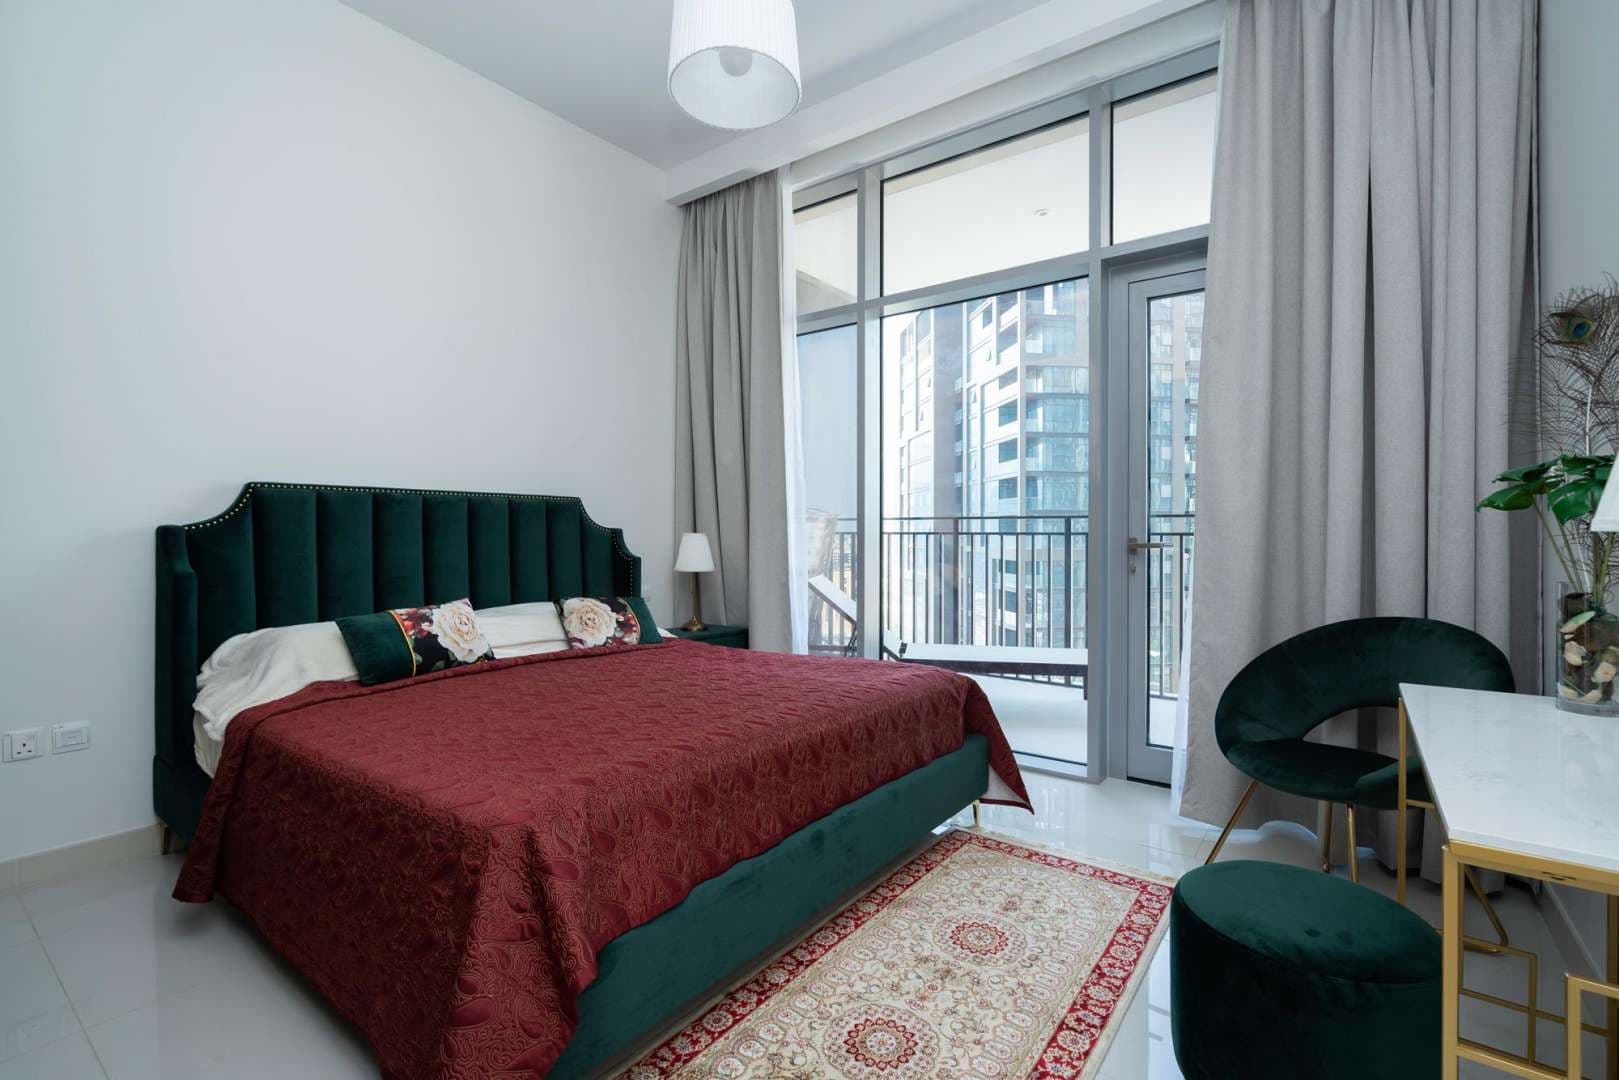 1 Bedroom Apartment For Rent Boulevard Crescent Lp05059 6b8111345f807c0.jpg